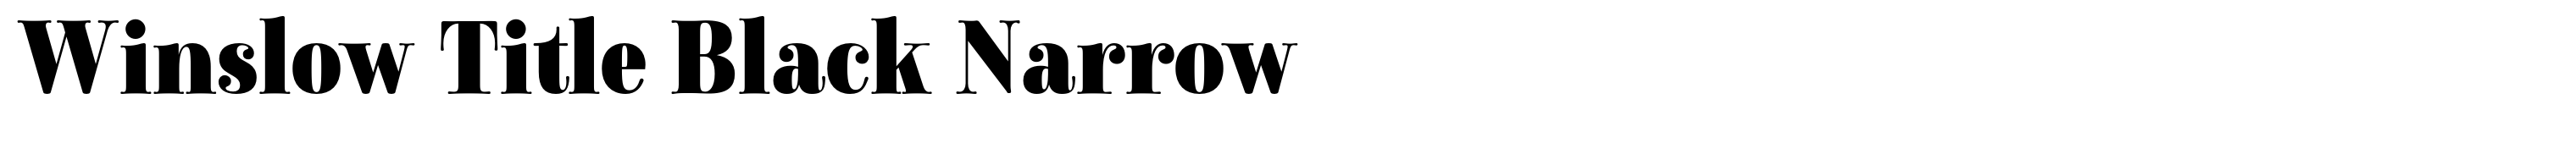 Winslow Title Black Narrow